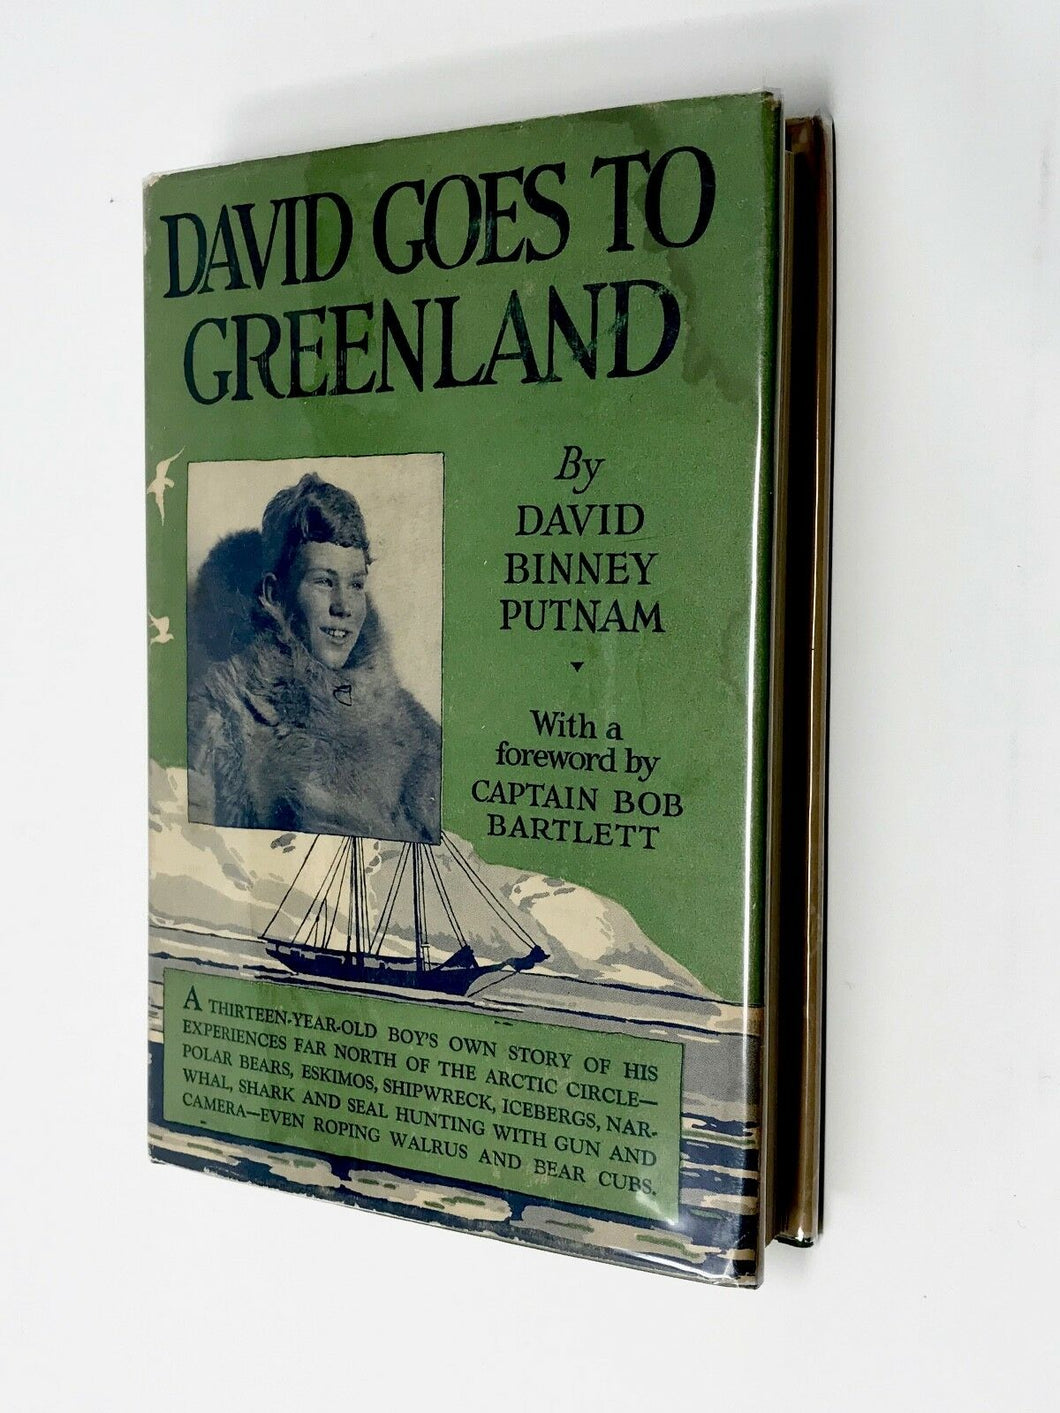 DAVID GOES TO GREENLAND - DAVID PUTNAM